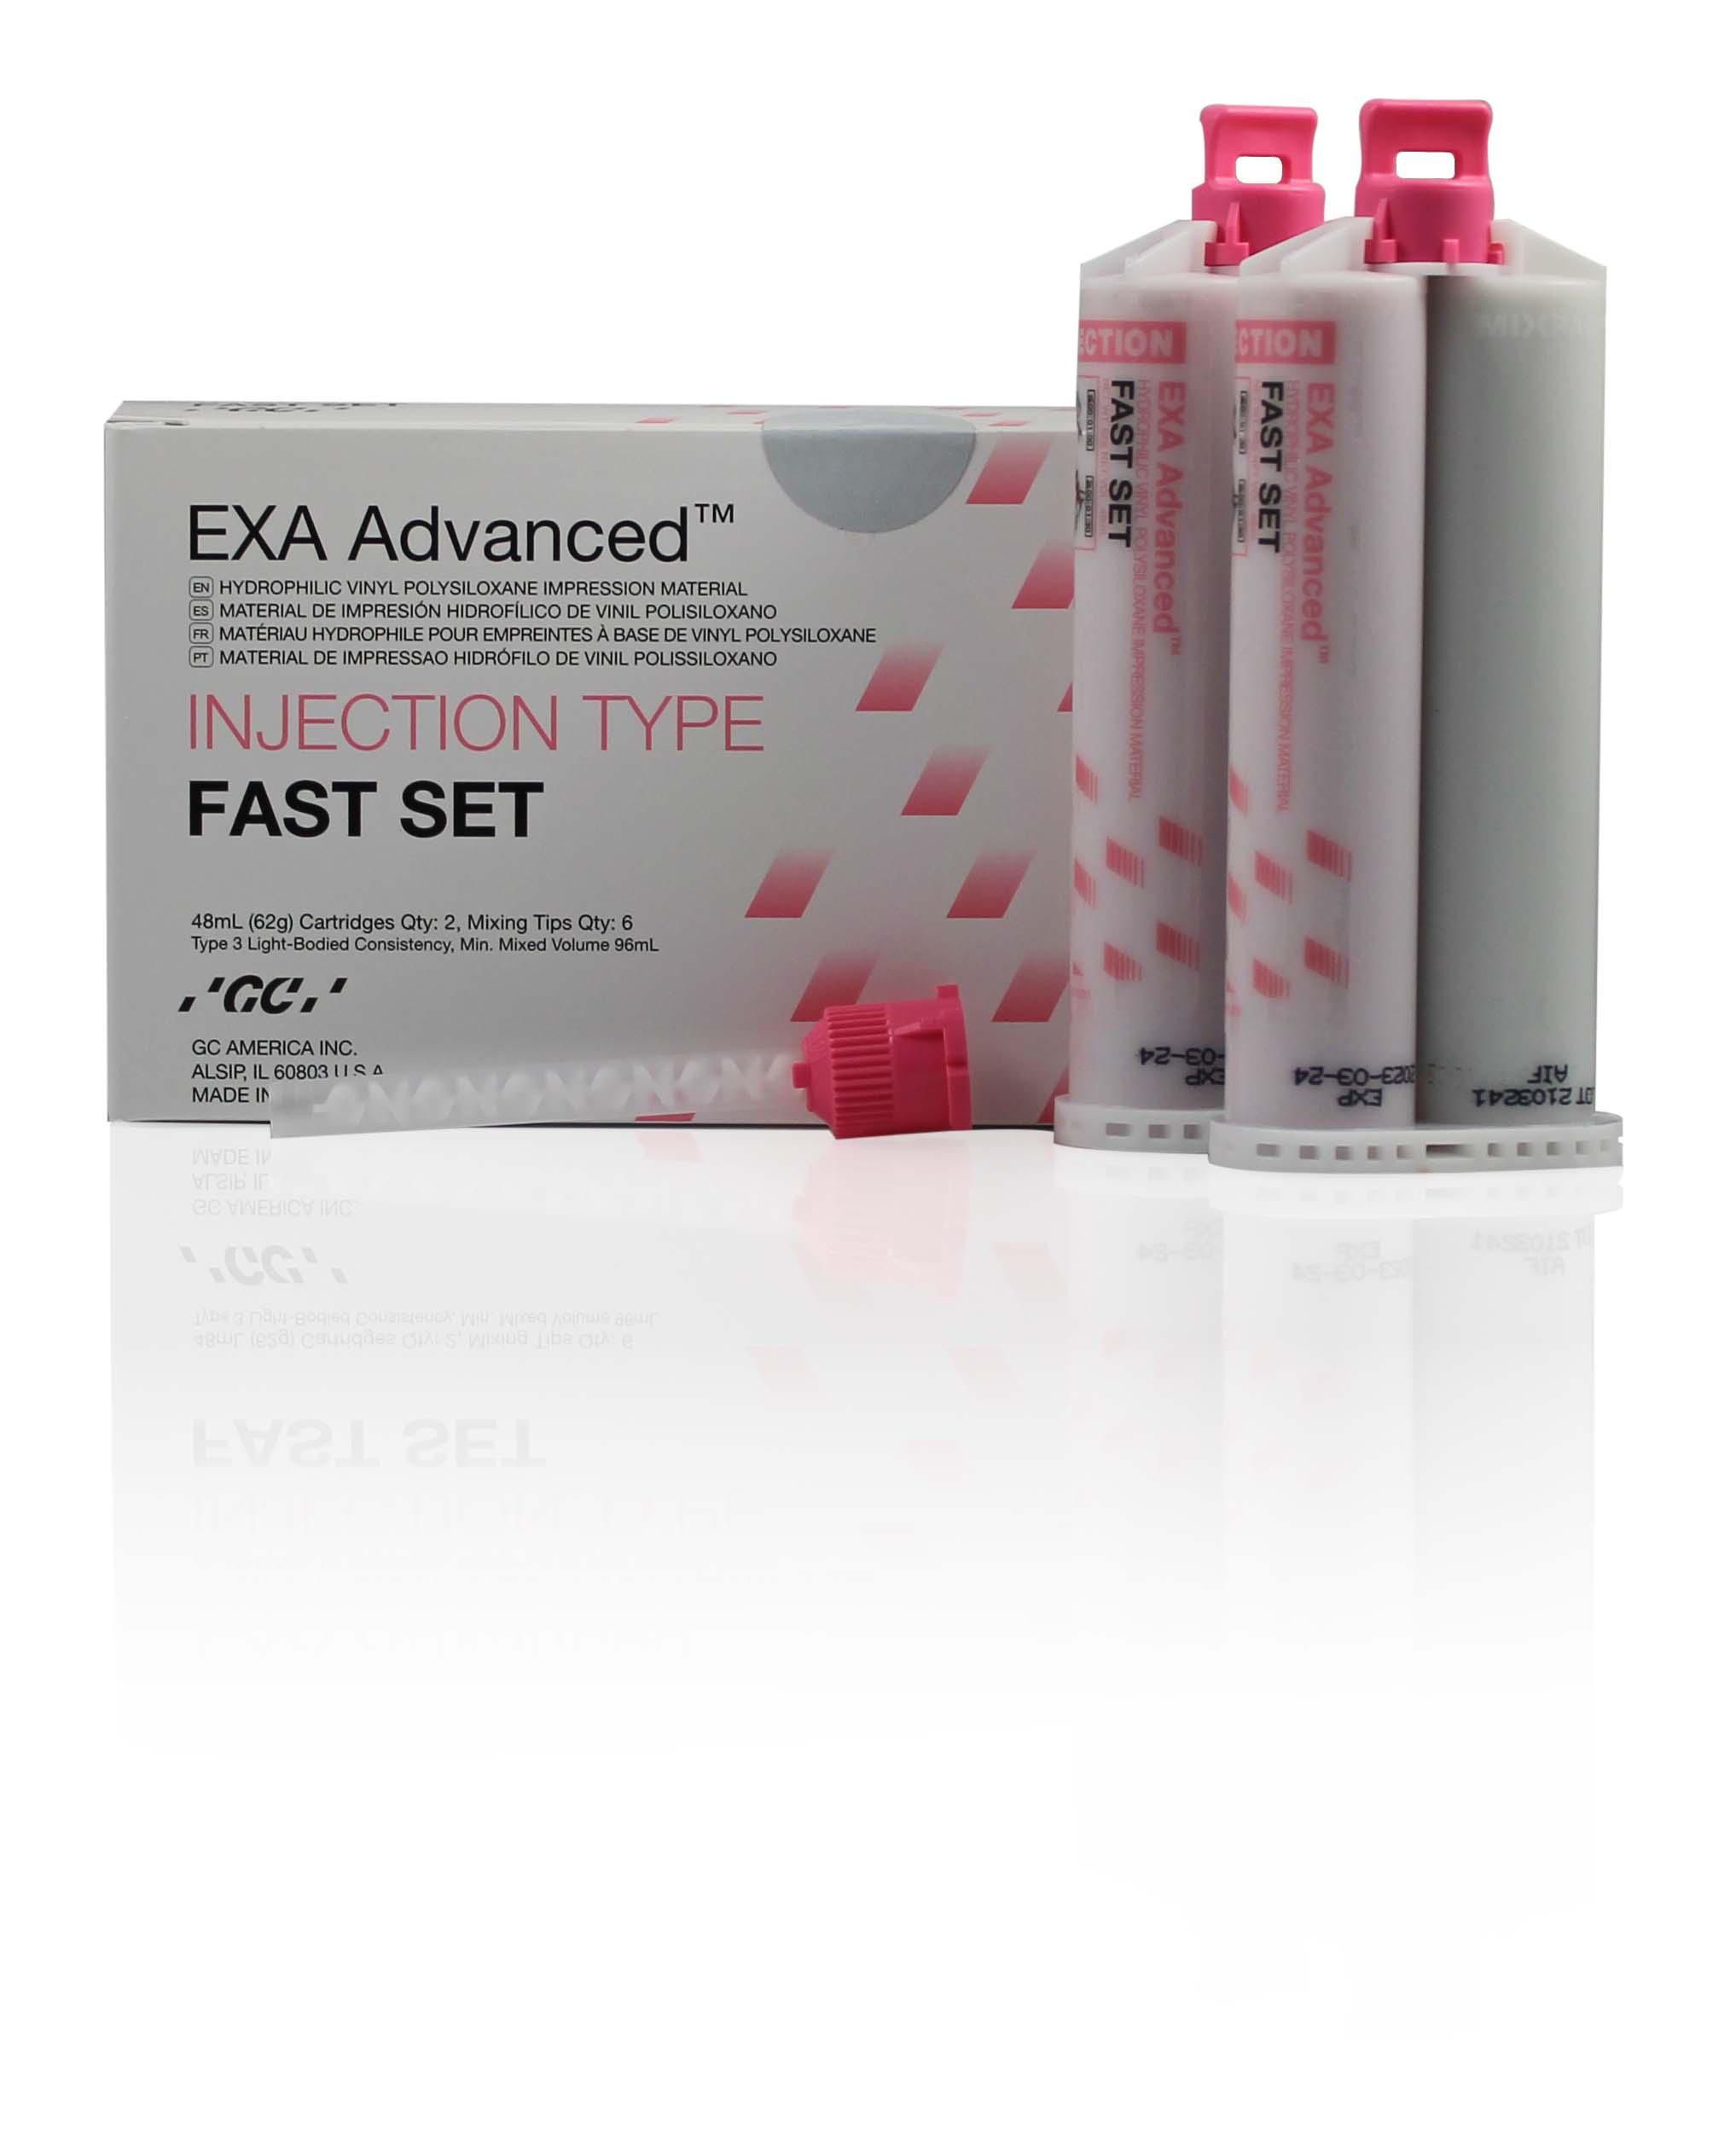 GC EXA Advanced injection Fast Set 2x48ml